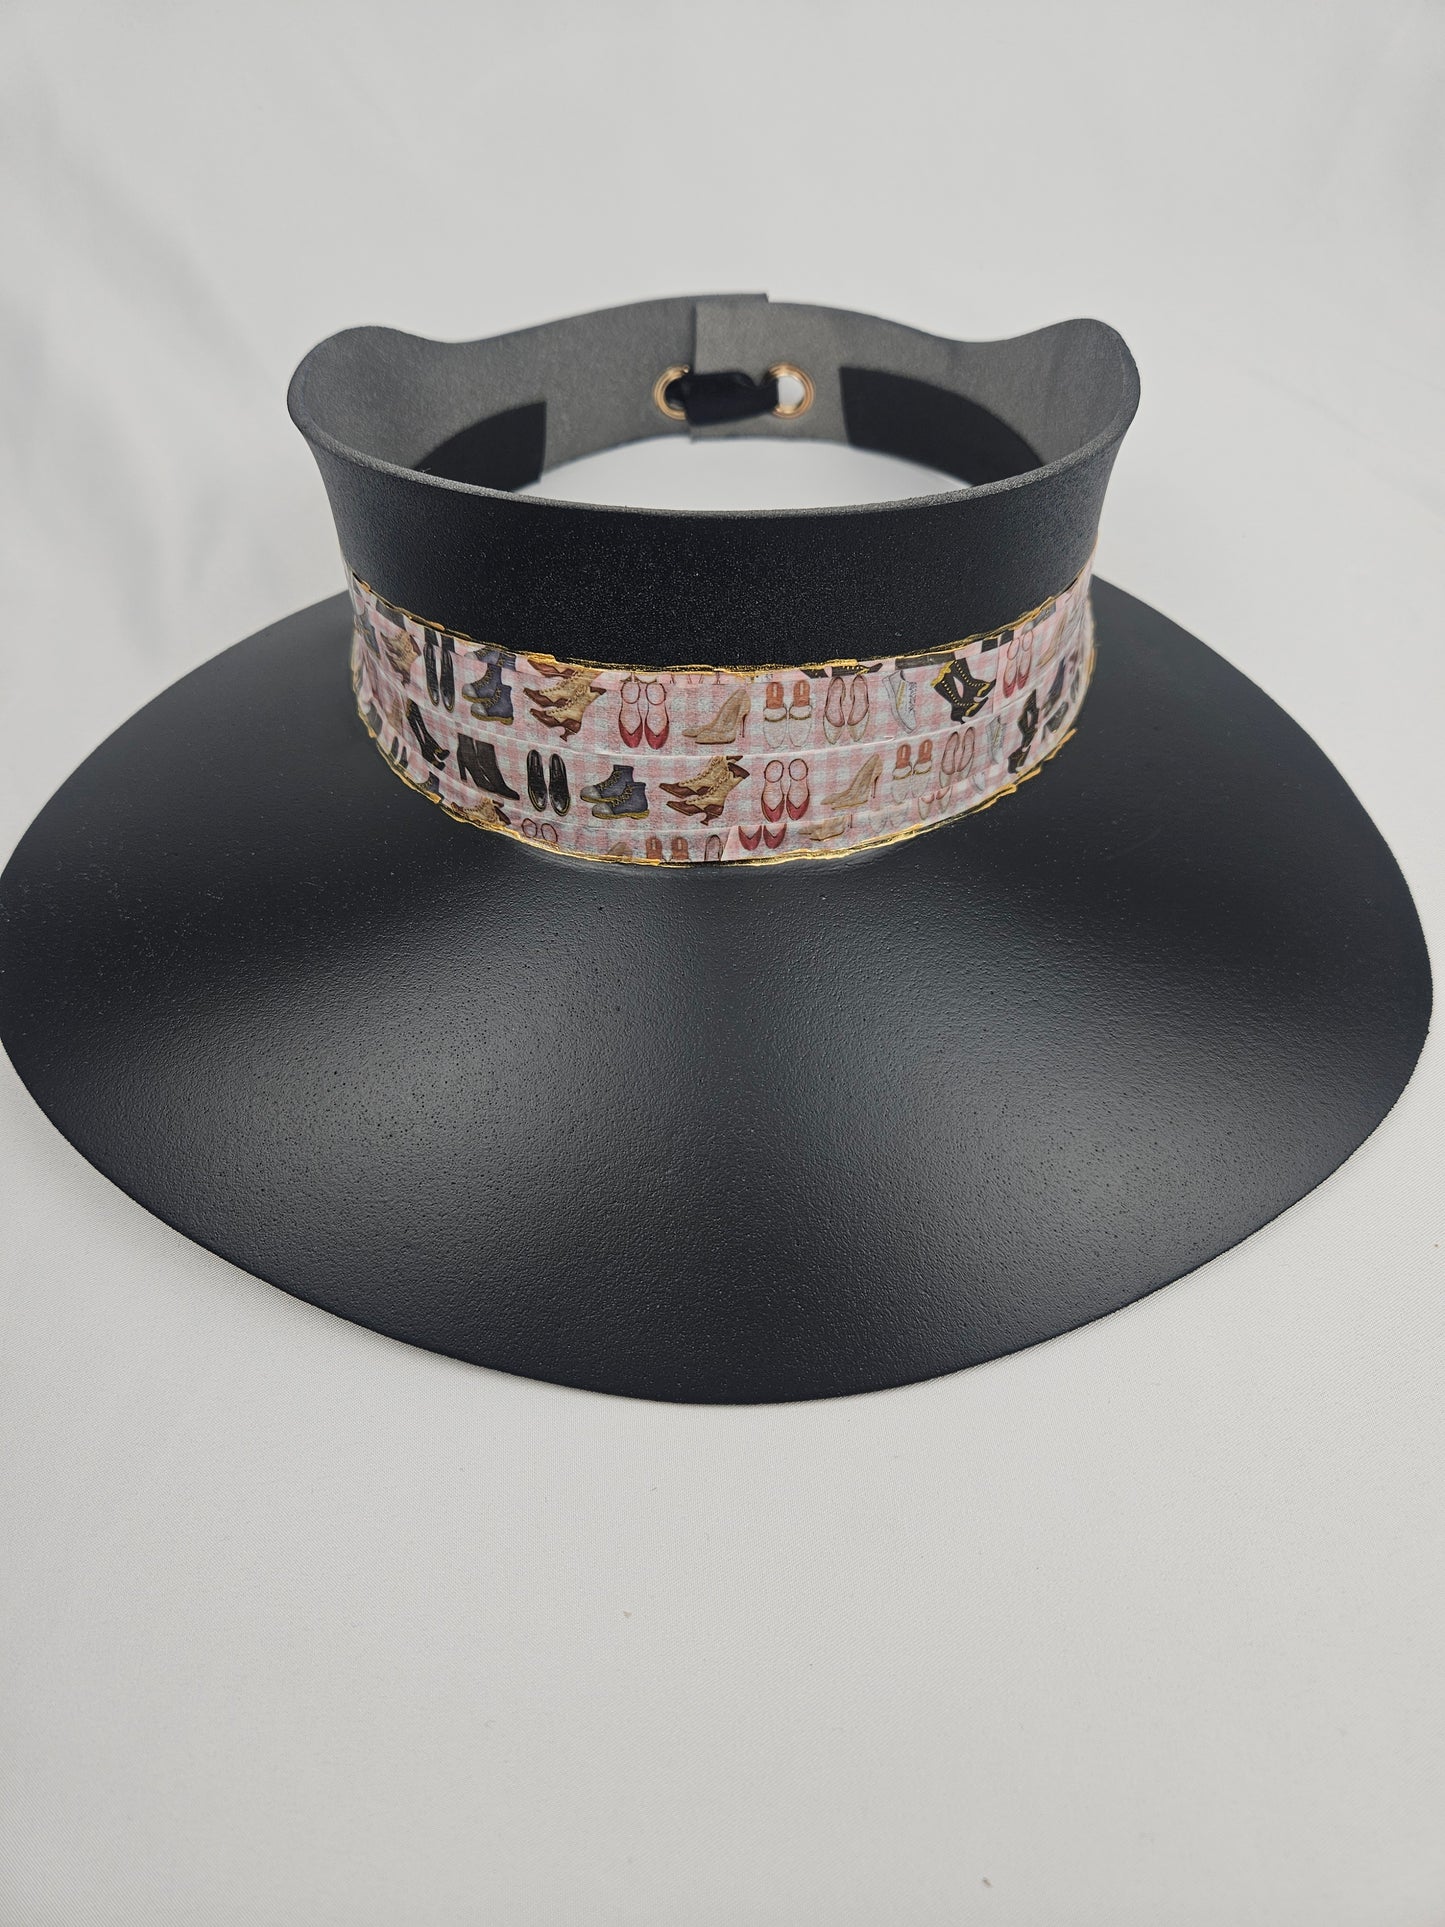 Timeless Black Audrey Foam Sun Visor Hat with Cute Shoe Themed Band: 1950s, Walks, Brunch, Tea, Golf, Wedding, Church, No Headache, Easter, Pool, Beach